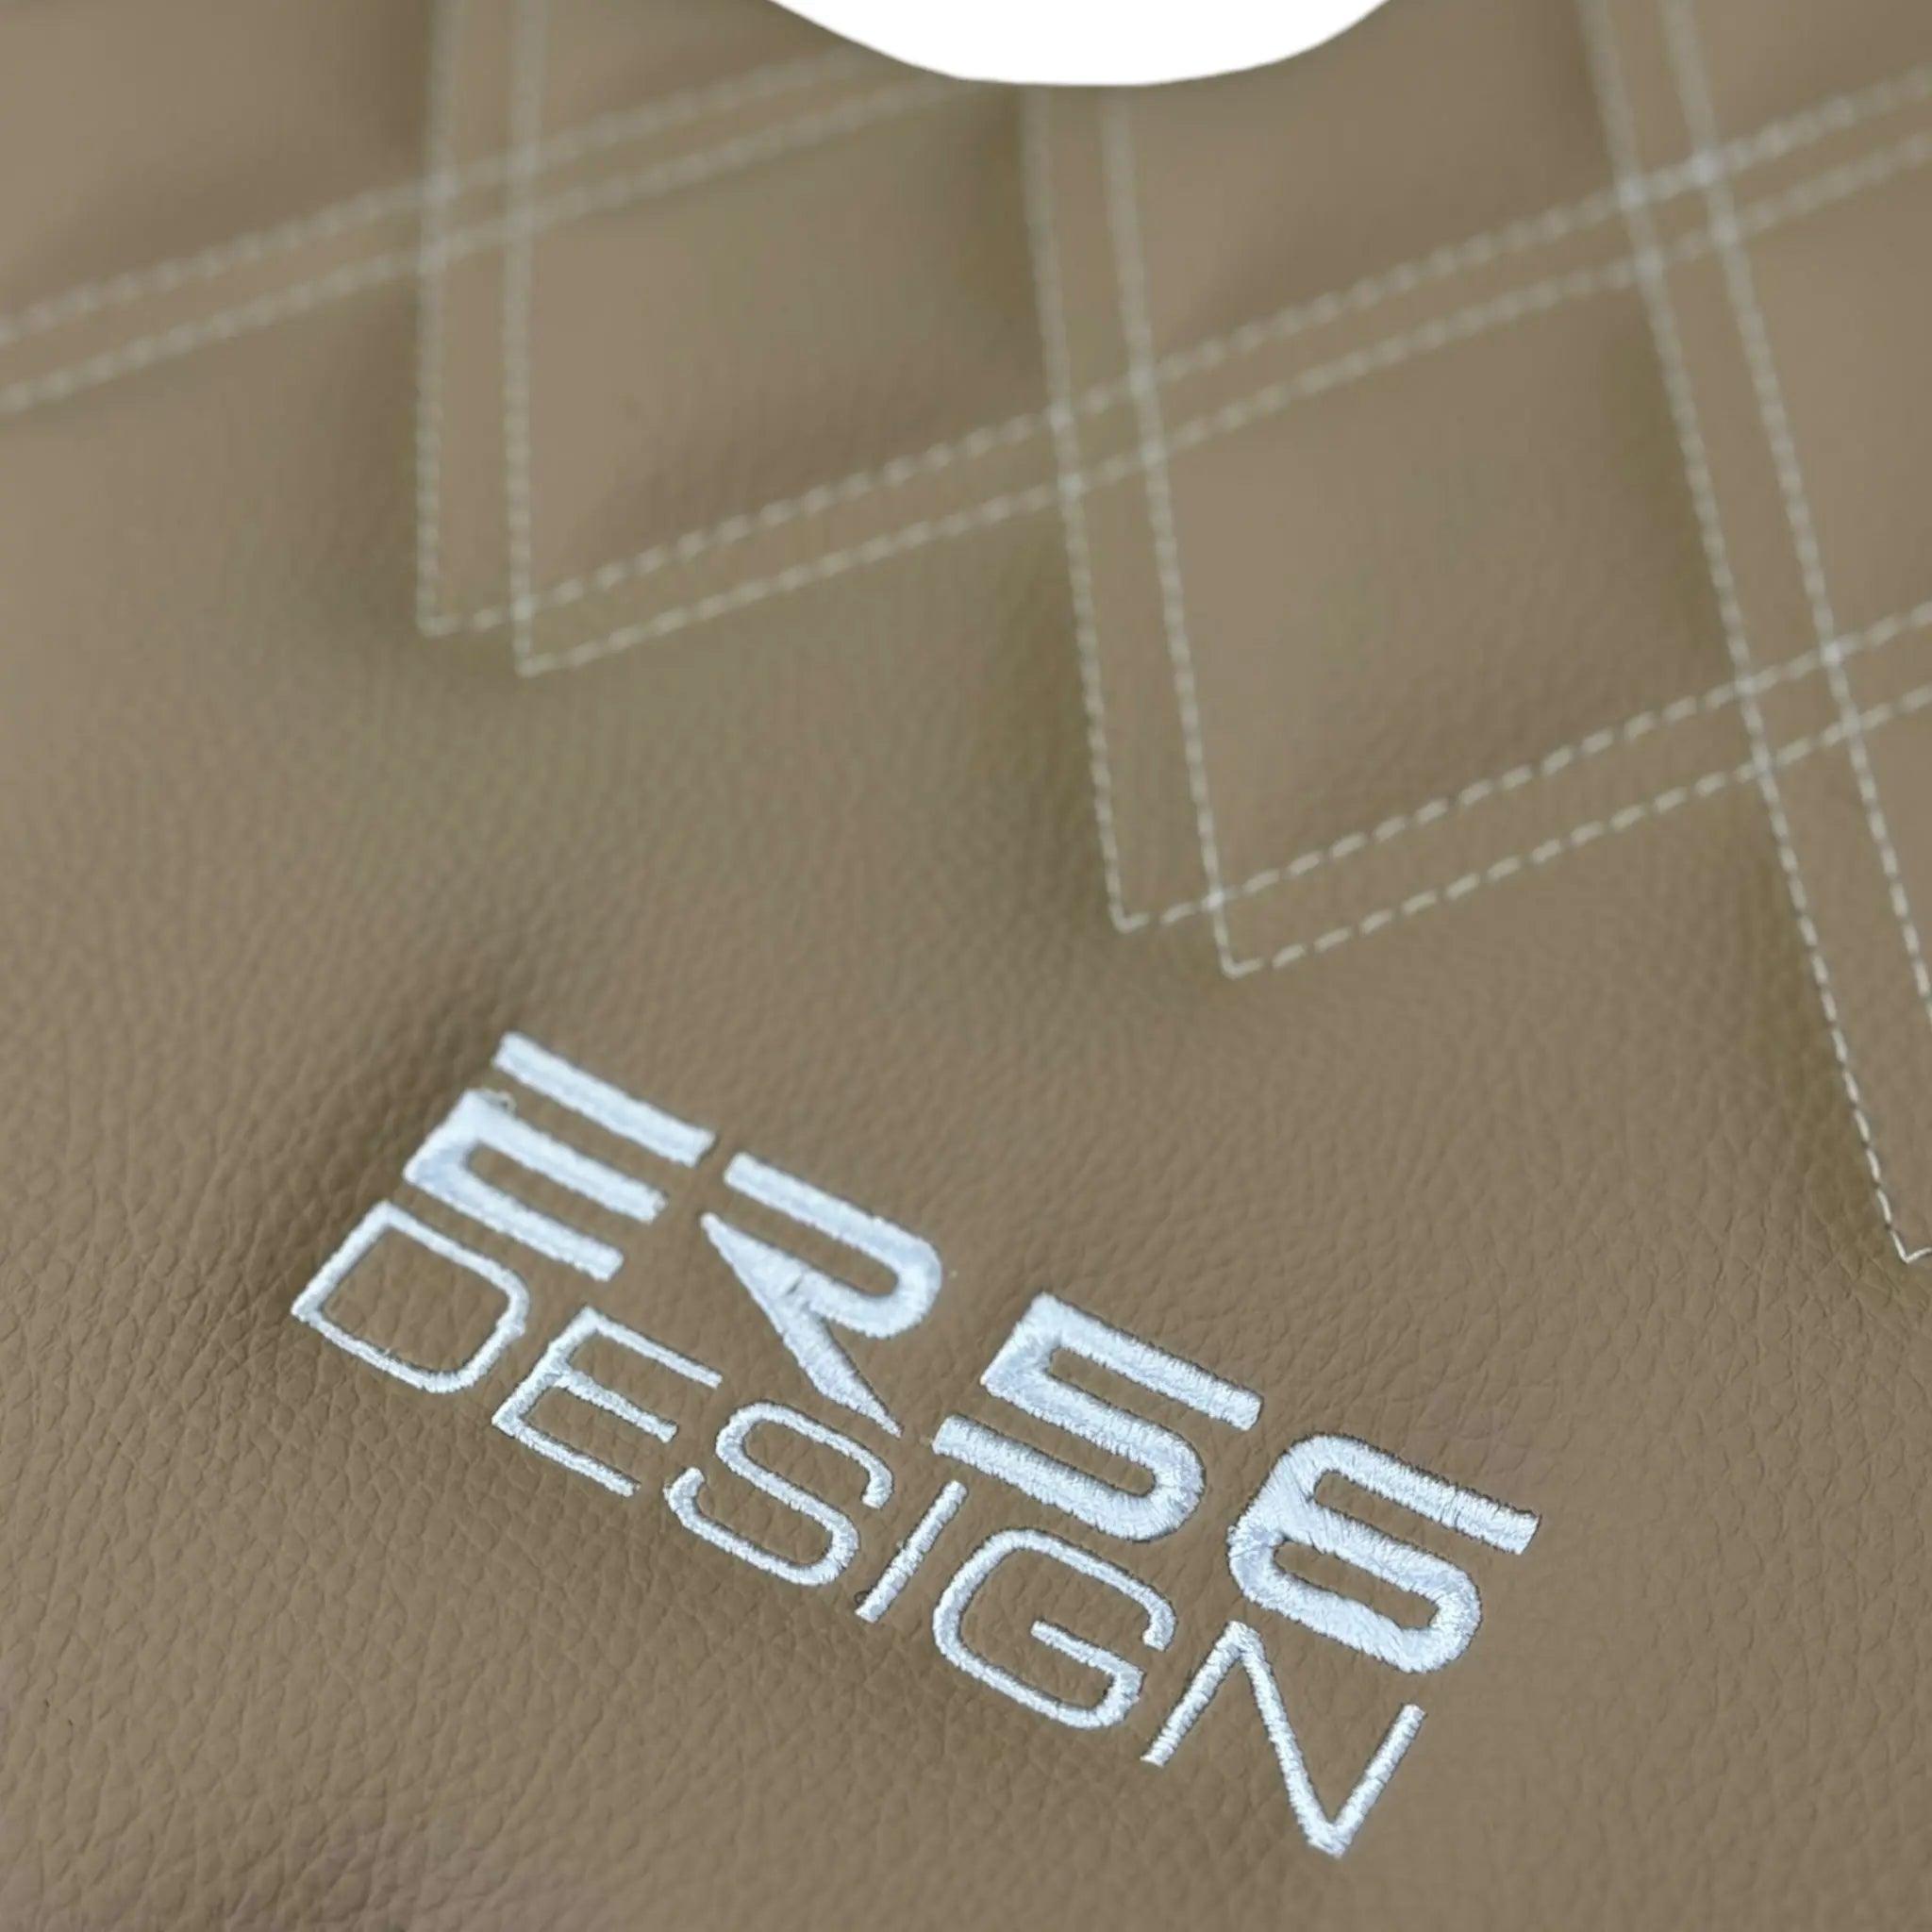 Beige Floor Mats for Bentley Continental GT (2003–2011) with Leather | ER56 Design